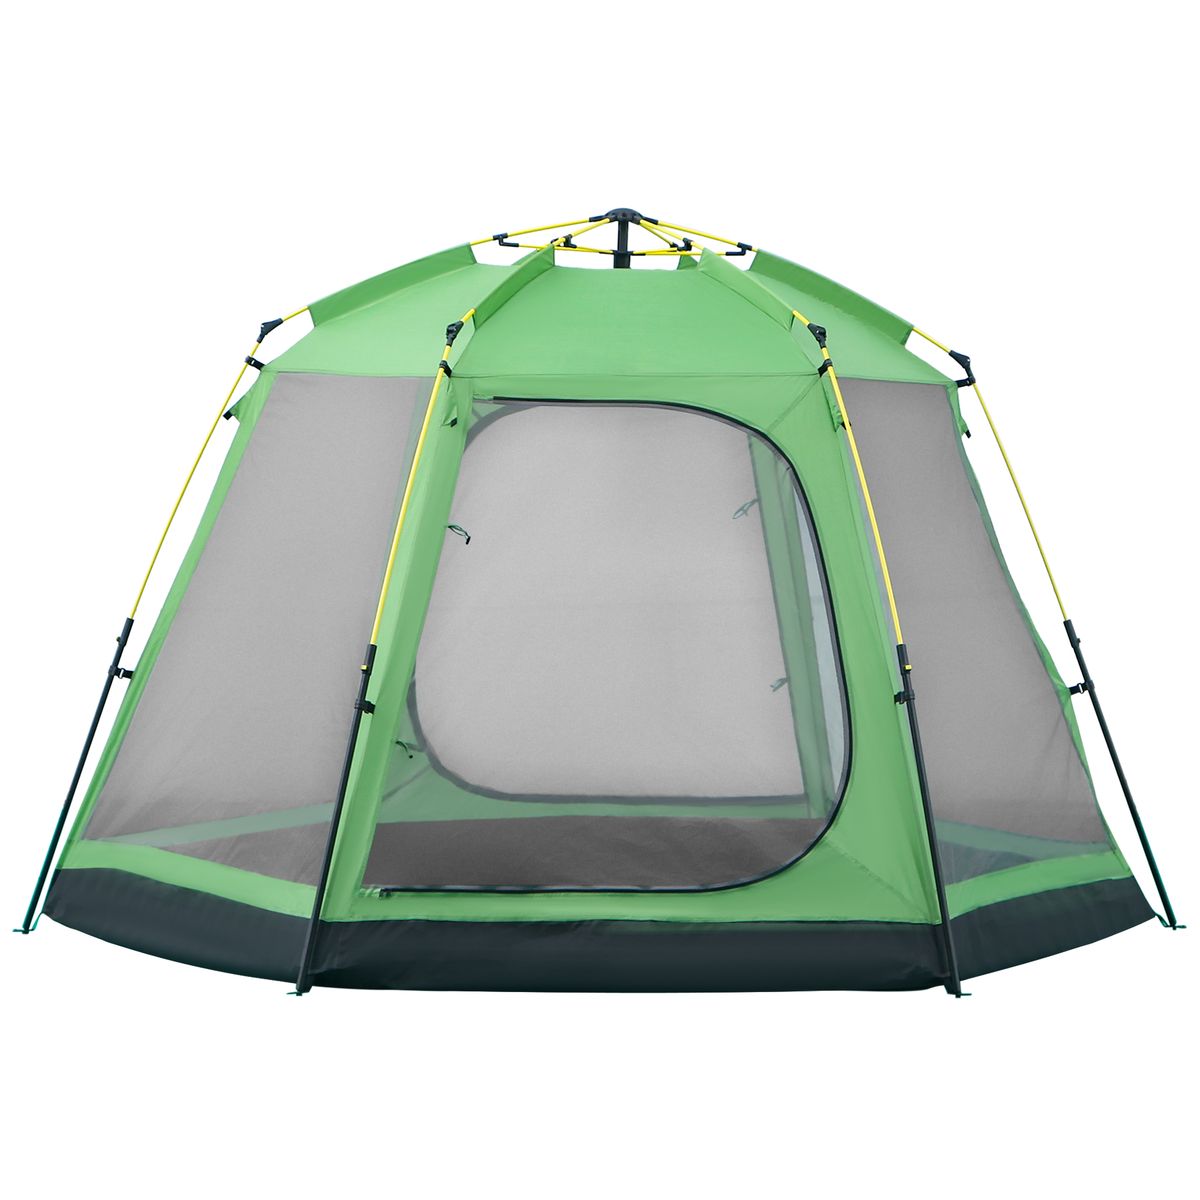 Tente de camping pop-up 6 personnes fibre verre polyester vert Outsunny